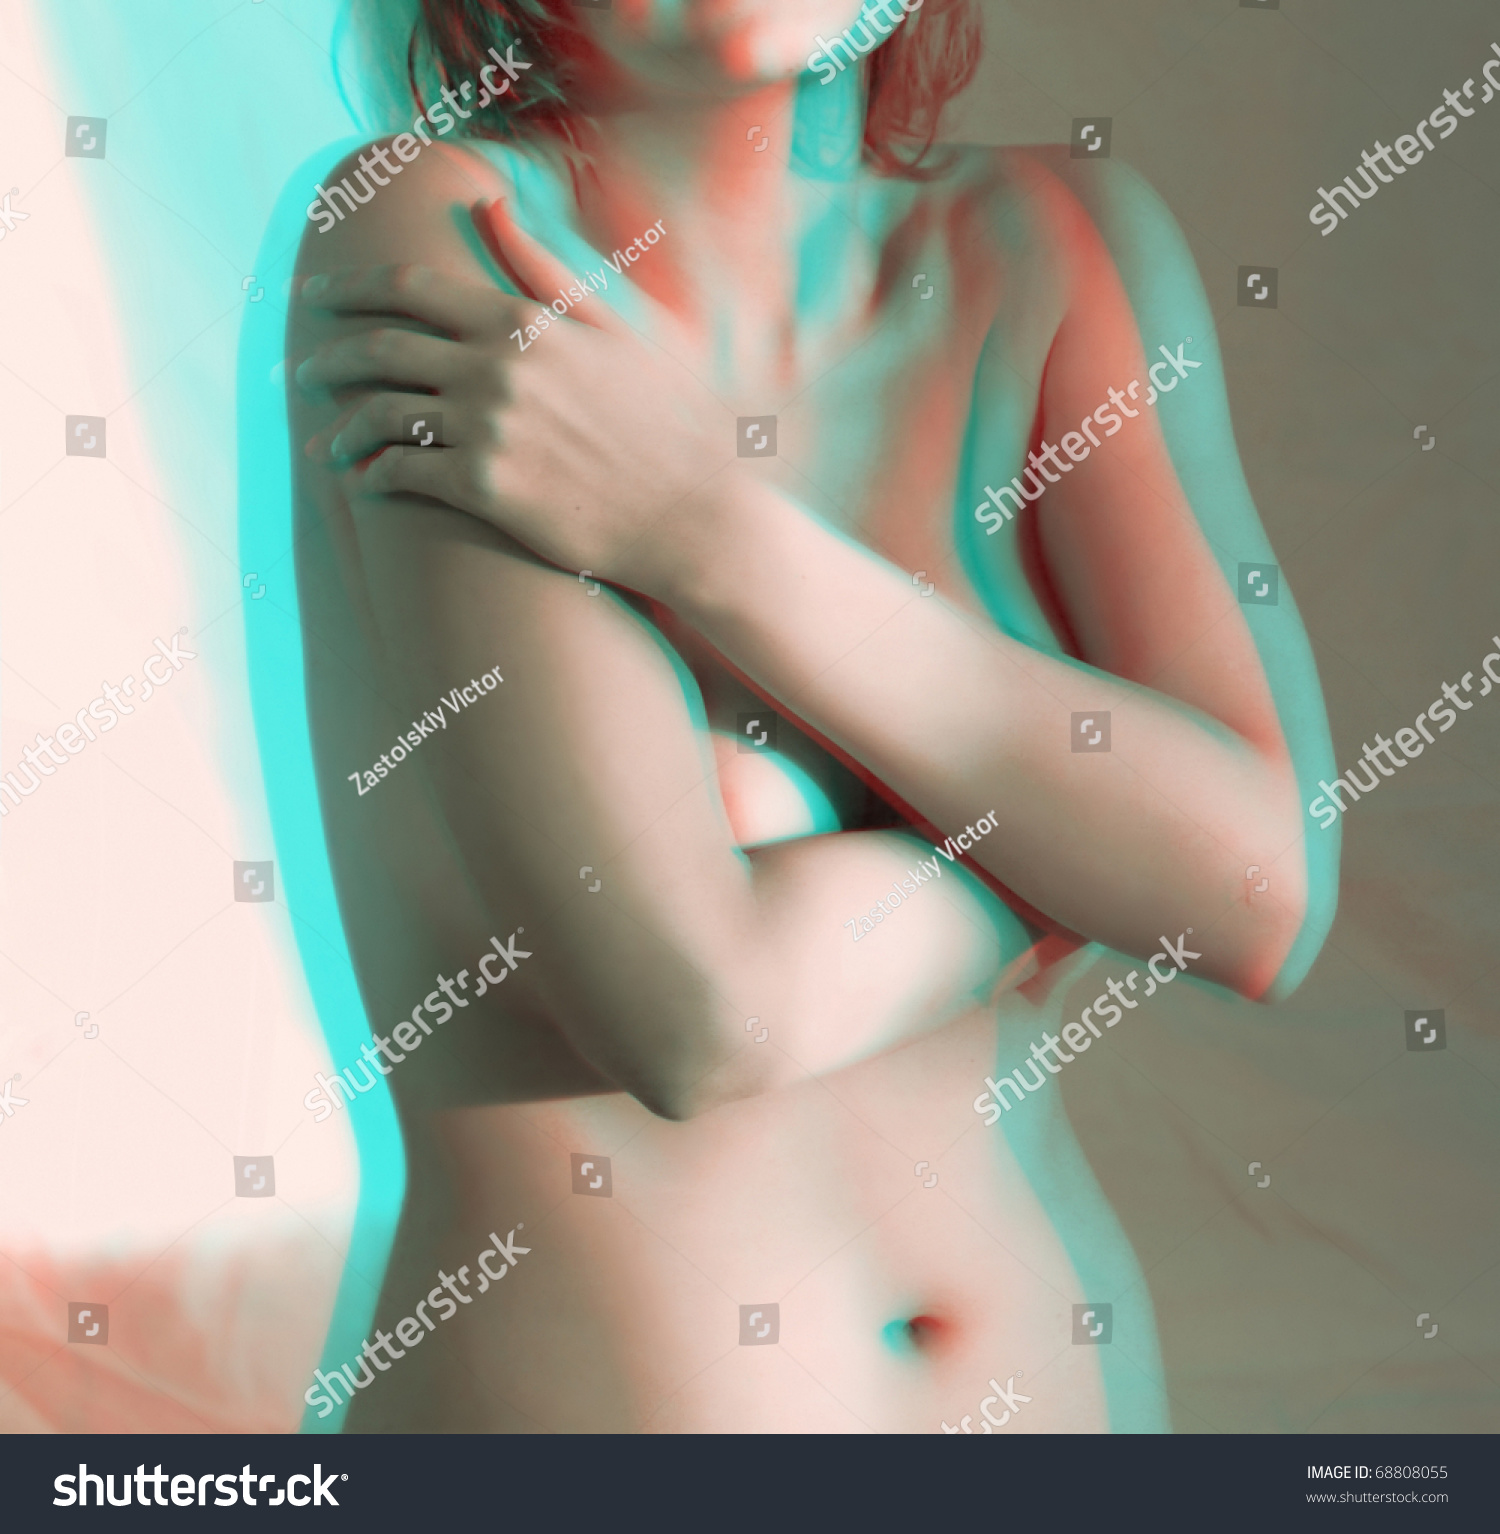 Stereoscopic Nude 16